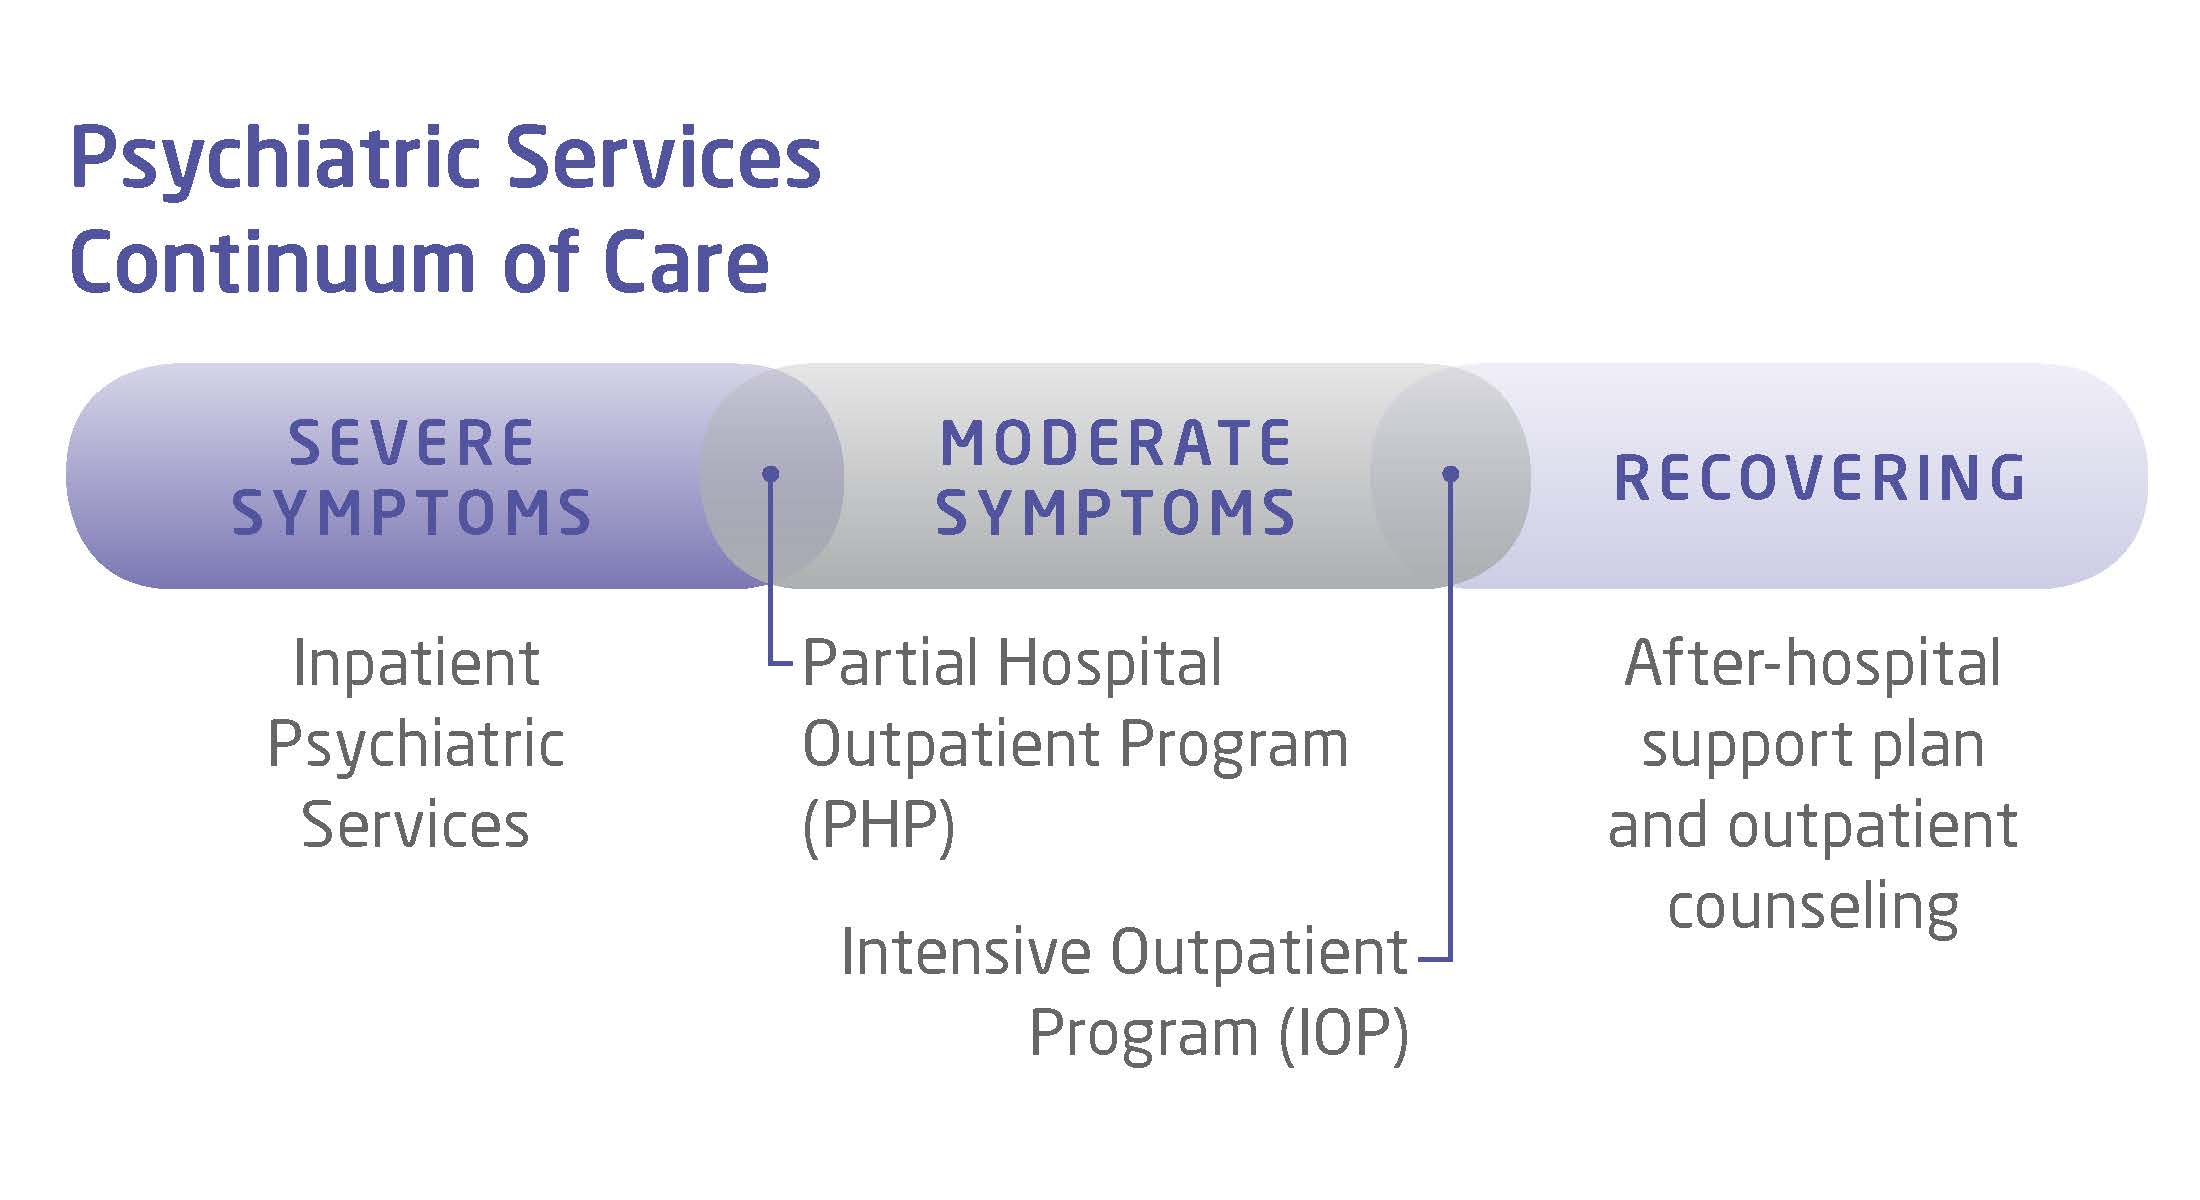 northwestern-medicine-continuum-of-care-for-psychiatric-services